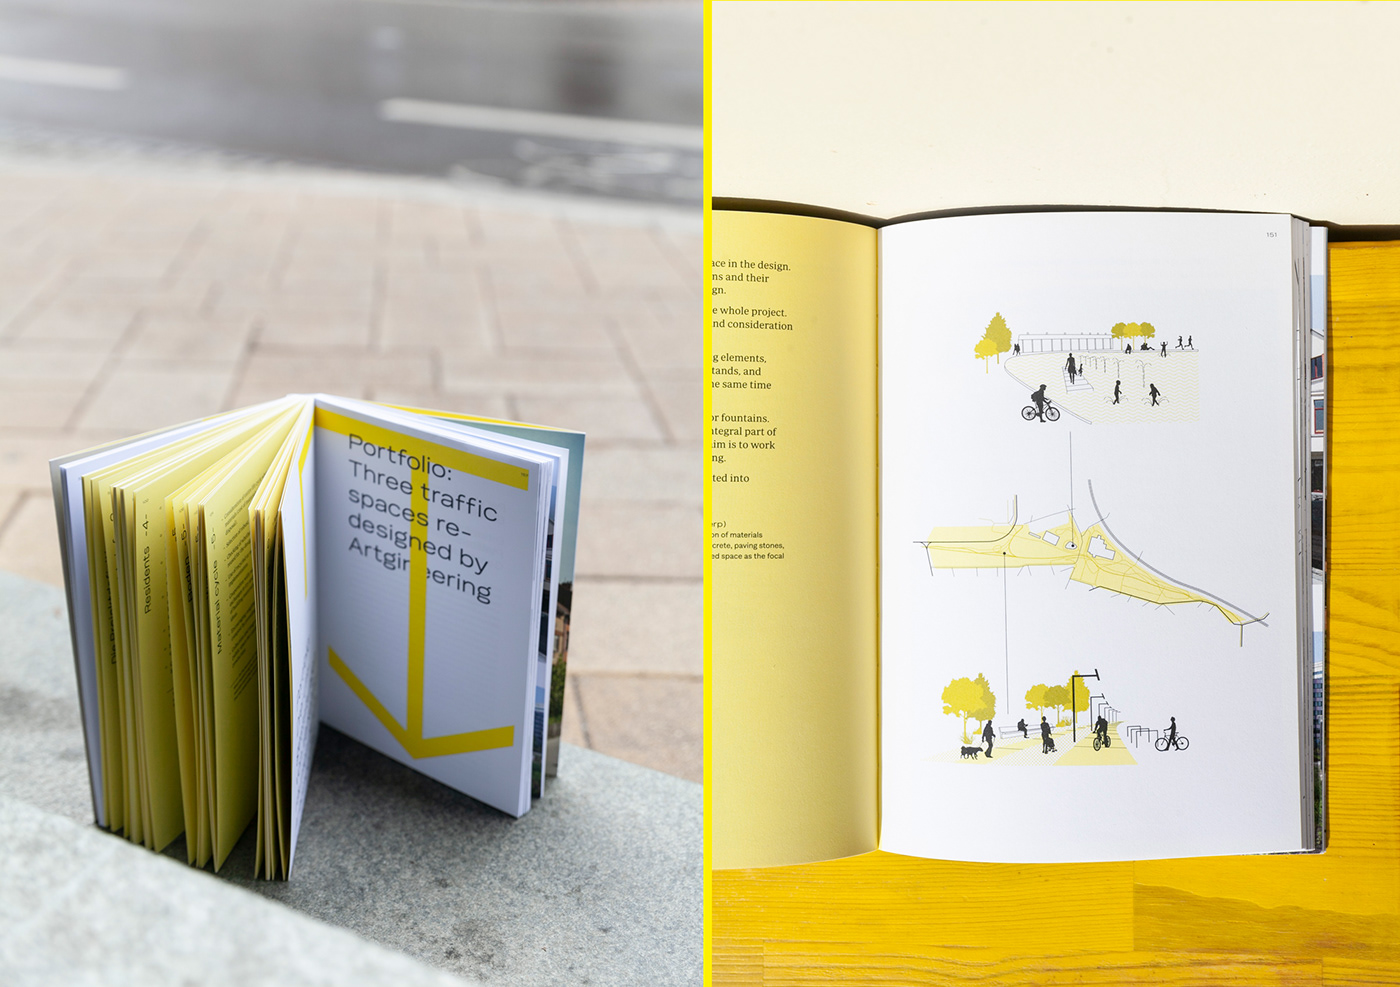 traffic Space  public book buch Architekturbuch yellow Gelb Overlay gialla